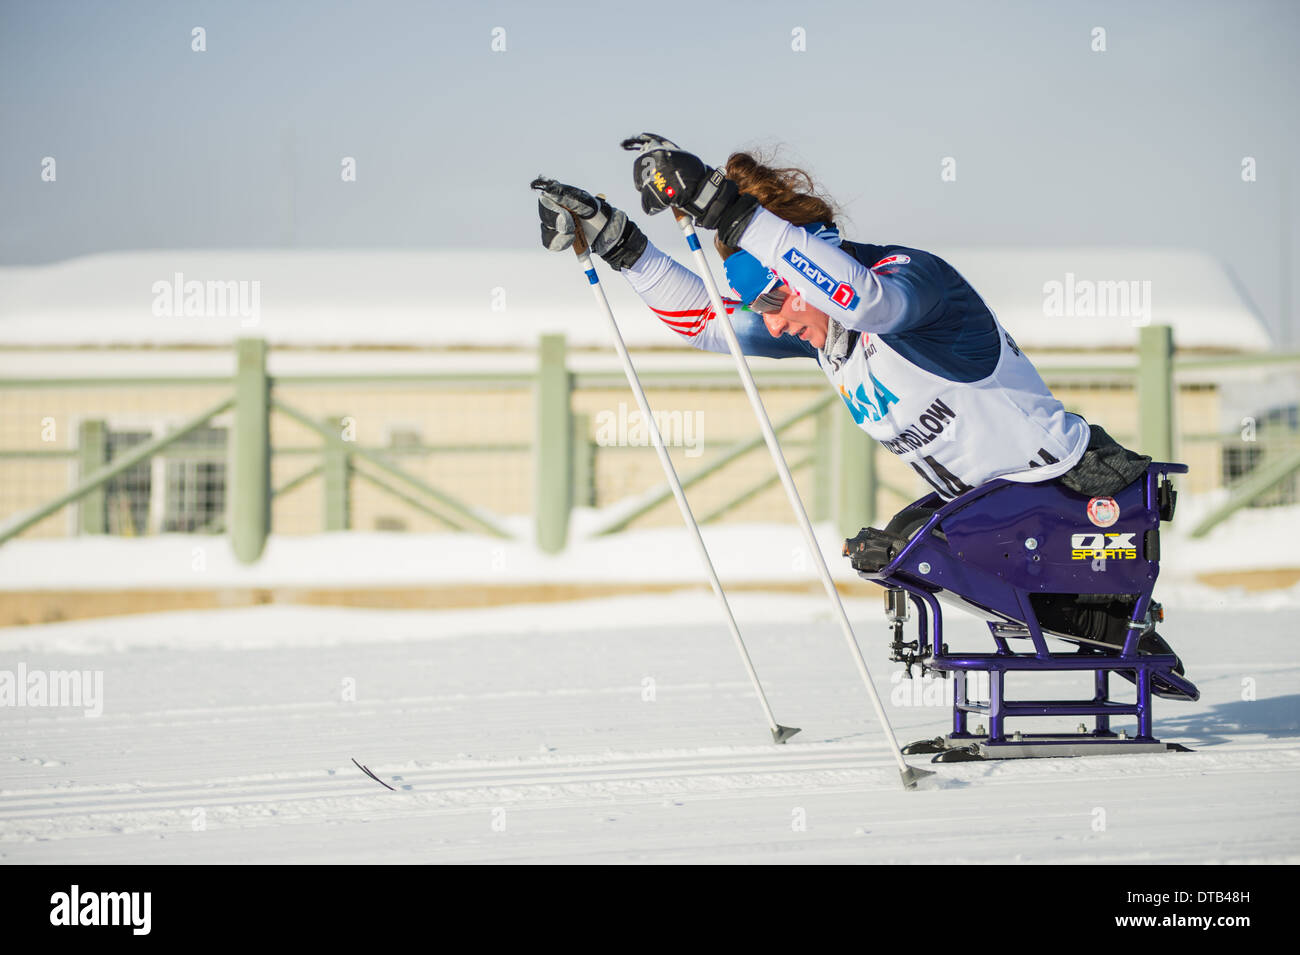 2014 U.S. Paralympics Nordic Skiing Nationals Stock Photo